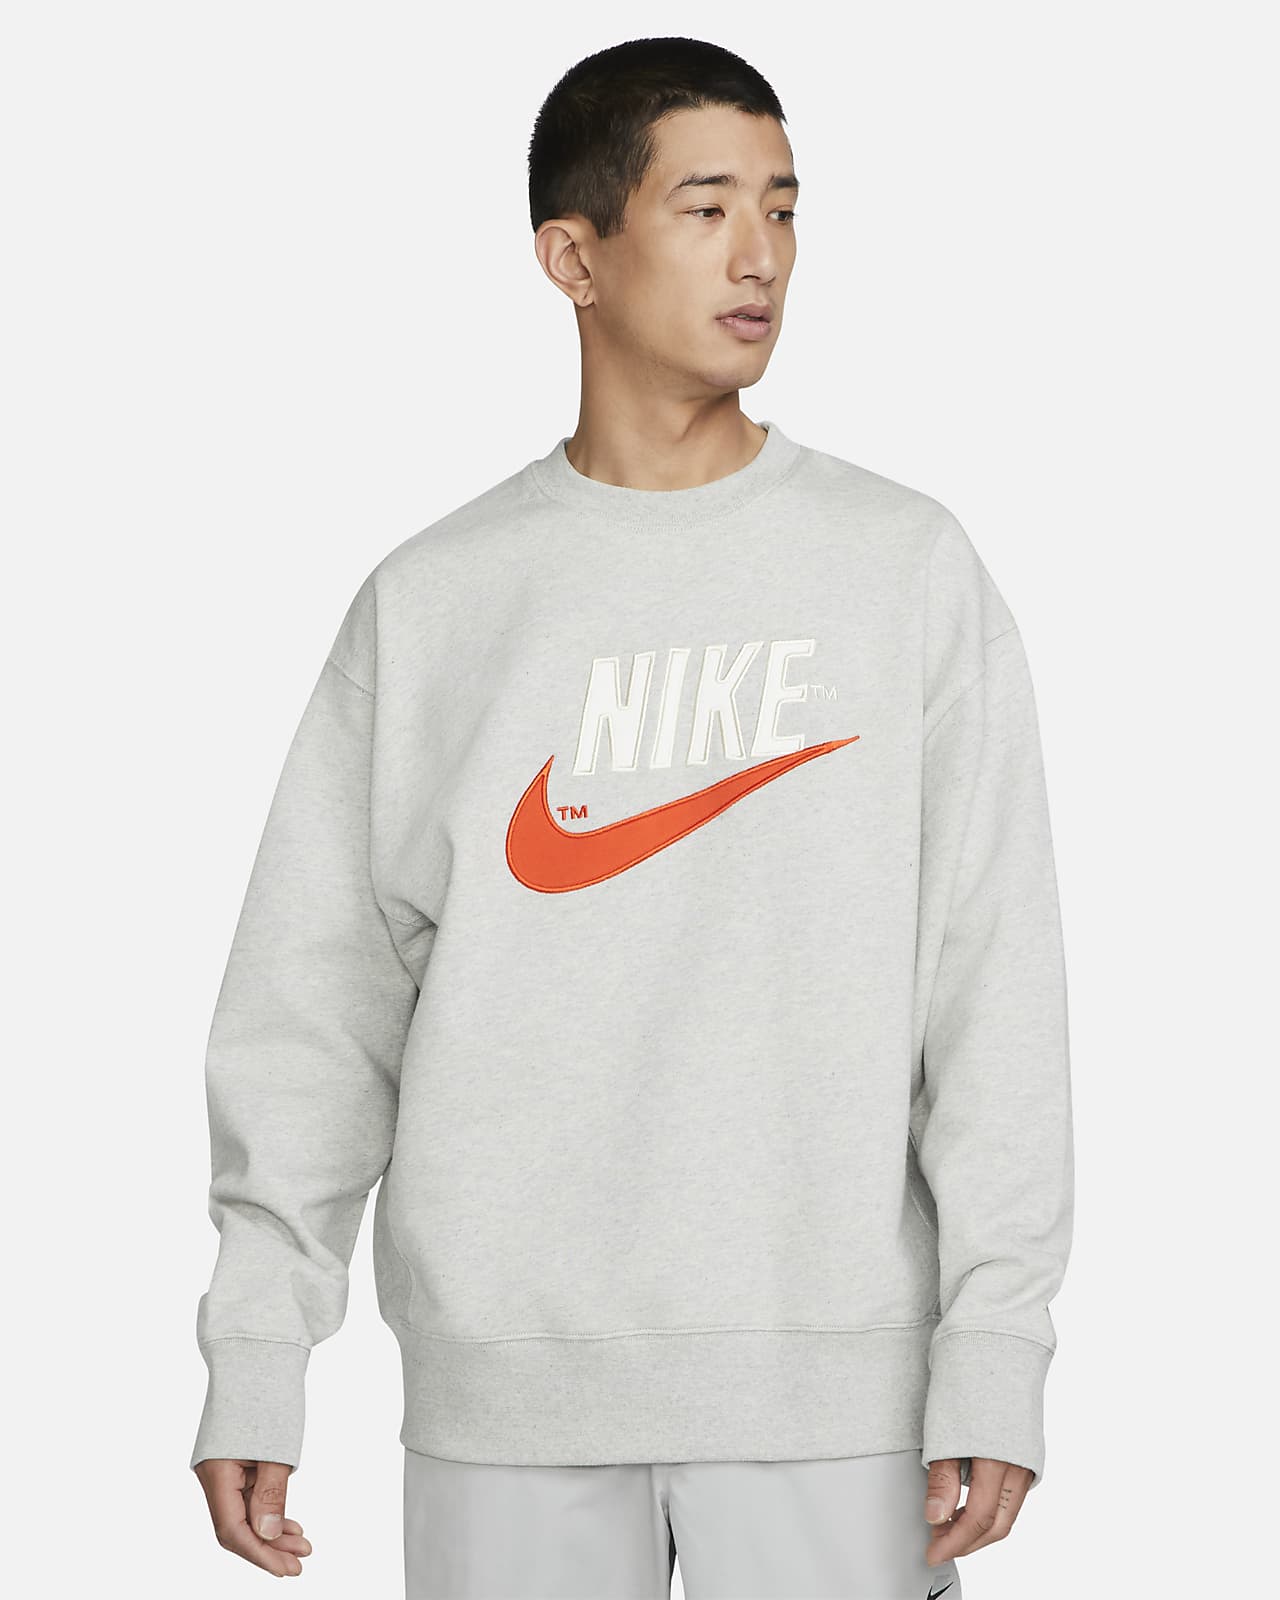 Nike Sportswear Sudadera de tejido French terry - Hombre